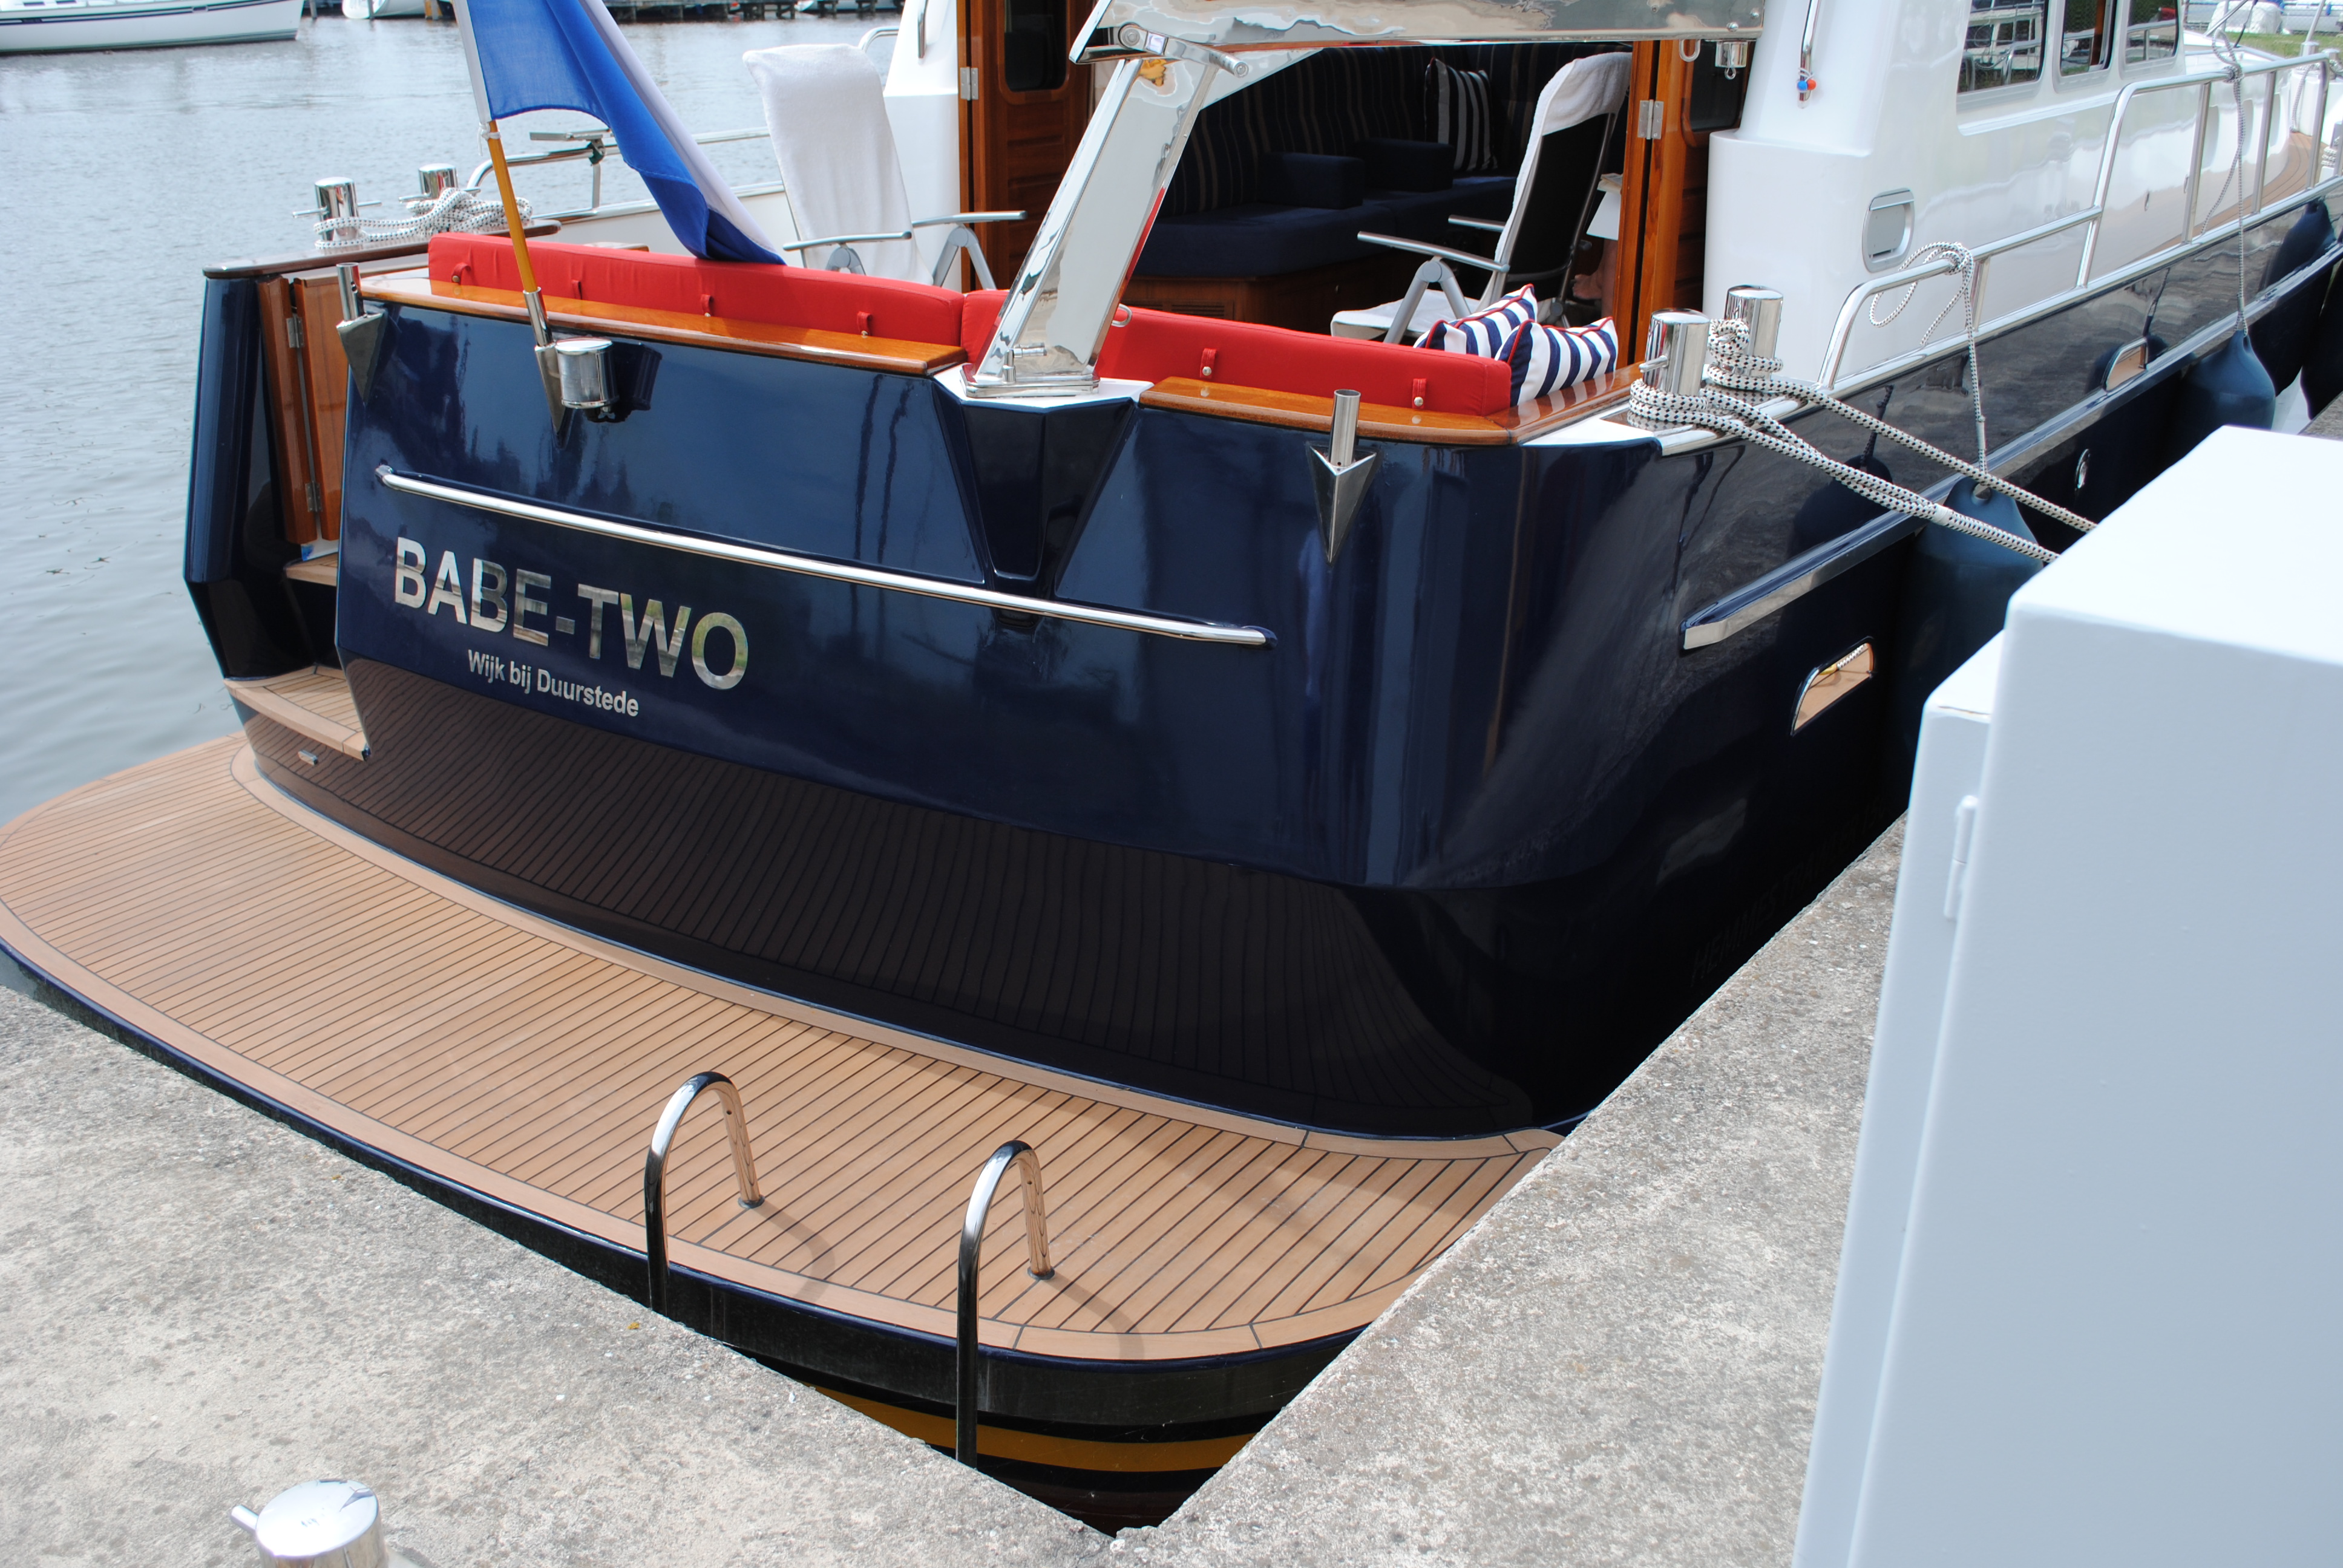 Hemmes Trawler "Babe Two"